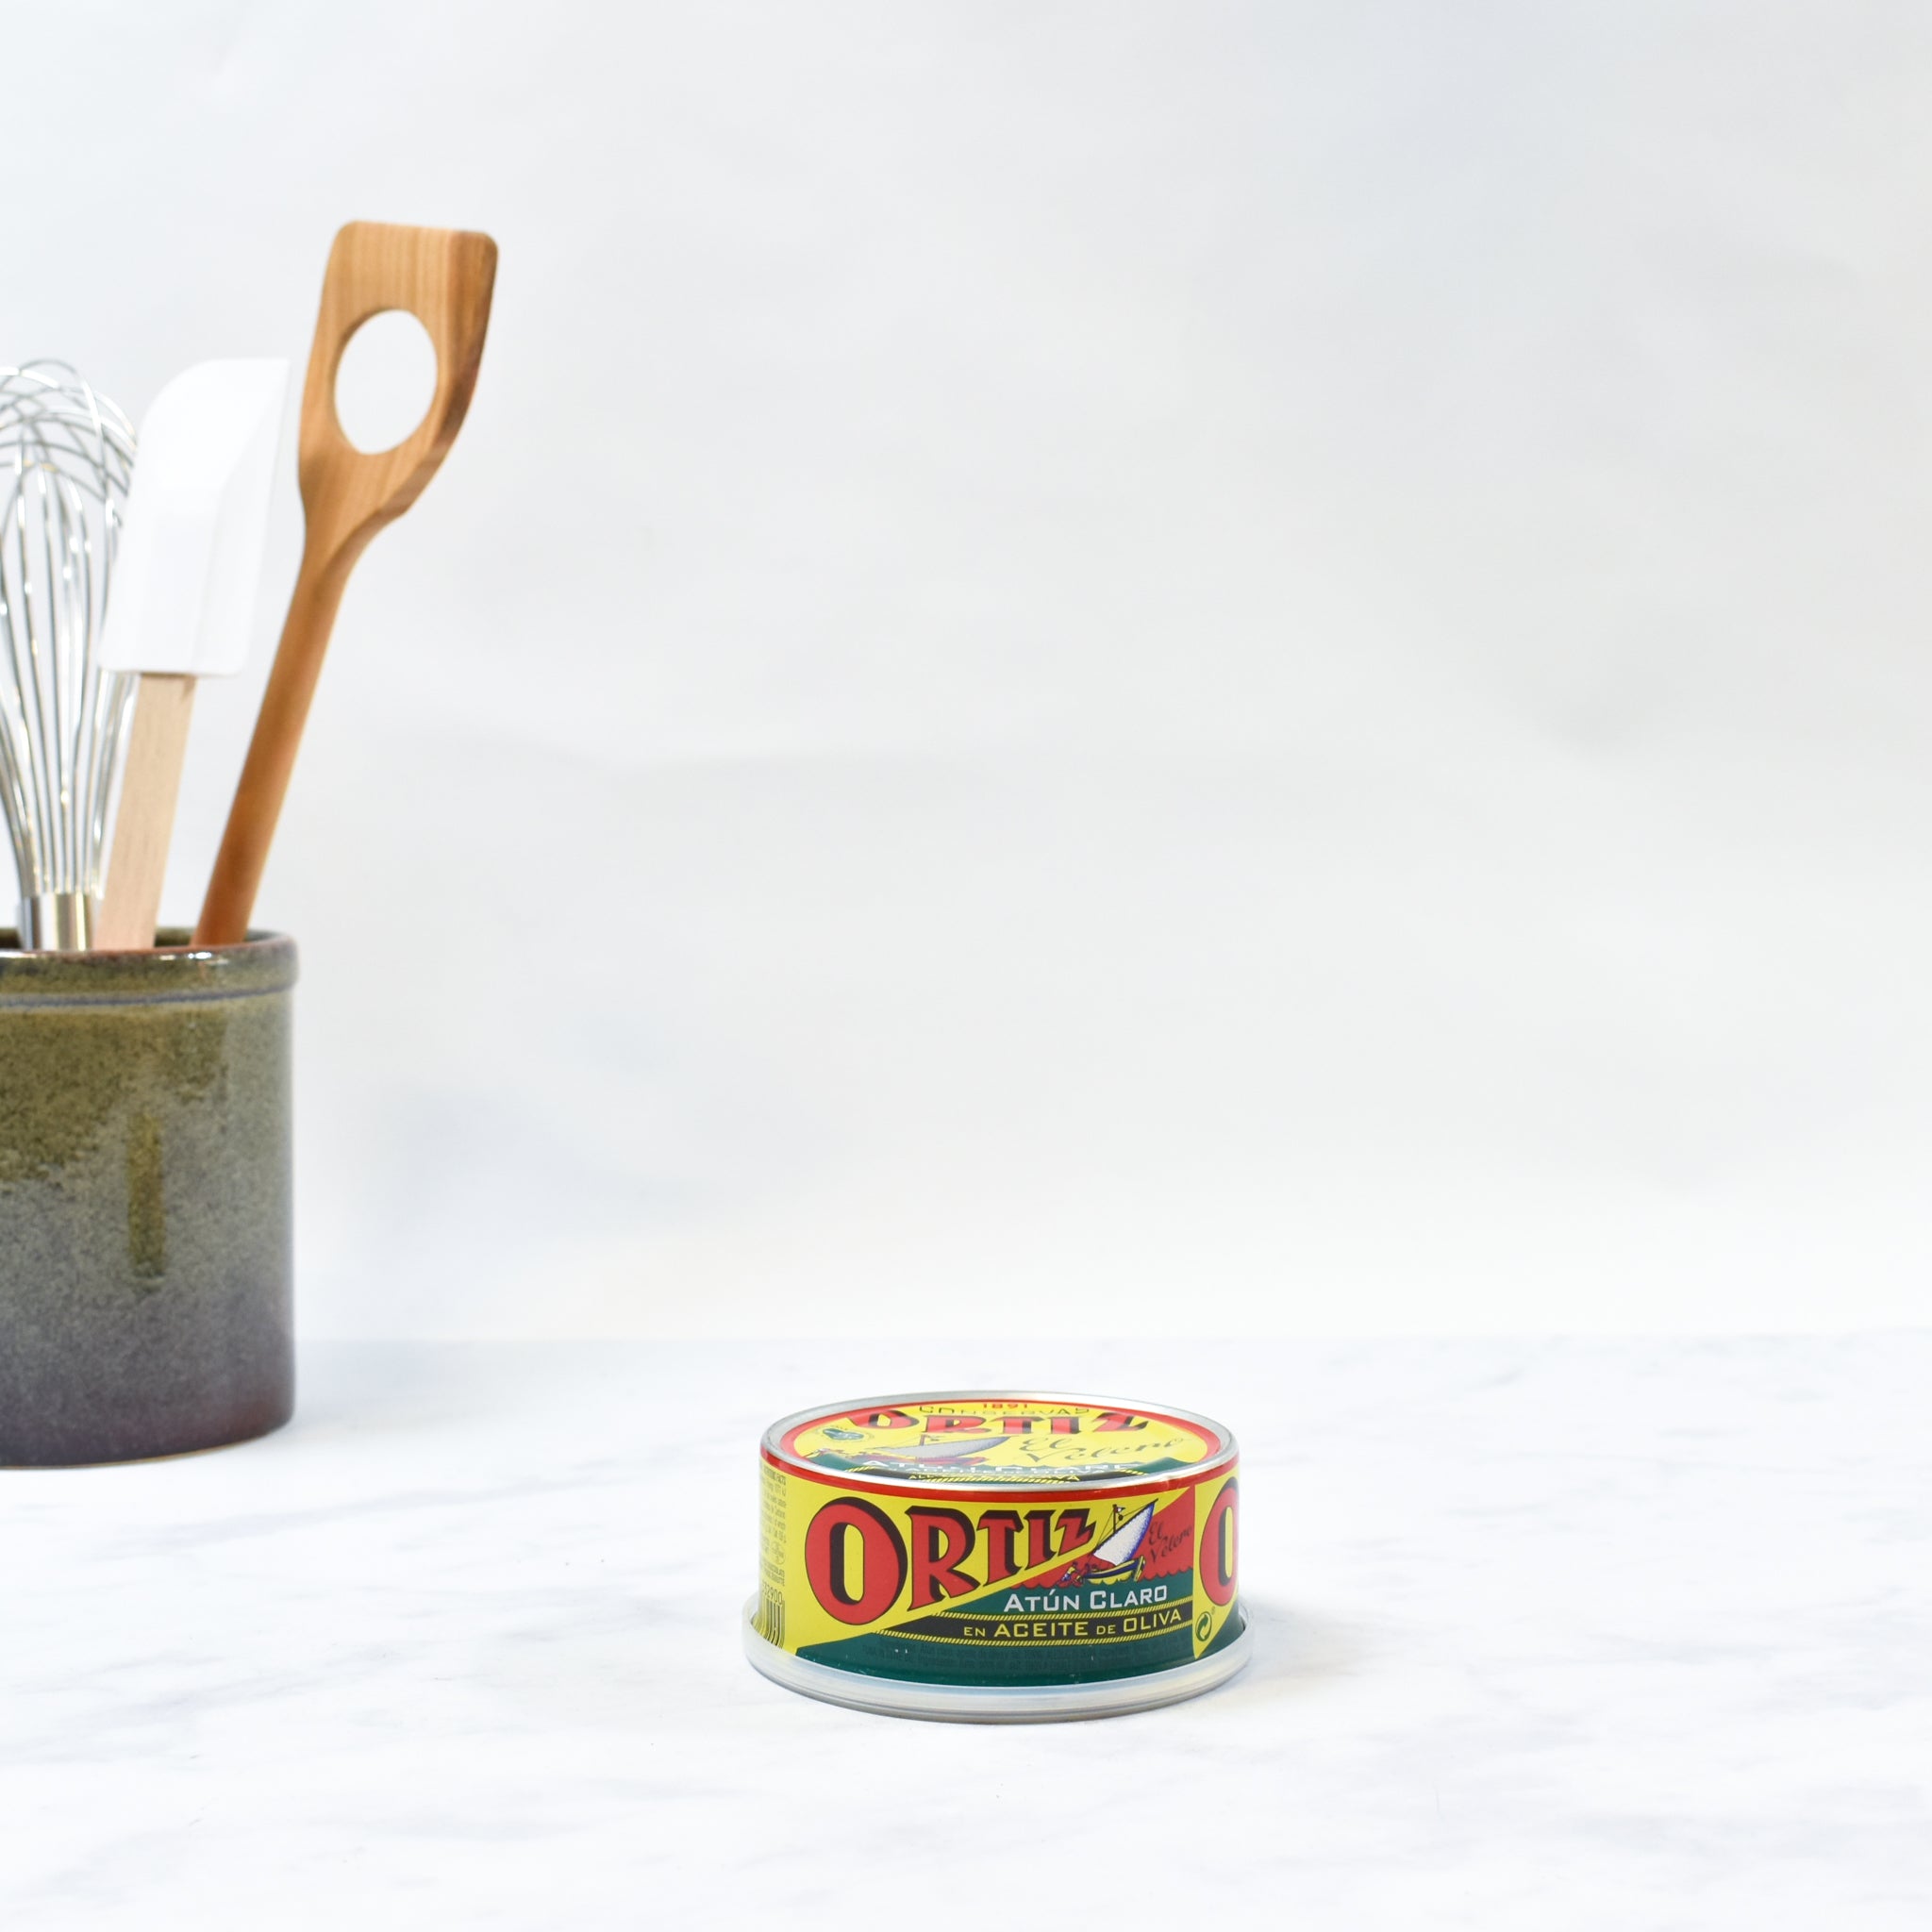 Ortiz Atun Claro Fillet In Olive Oil 250g Ingredients Seaweed Squid Ink Fish Spanish Food Lifestyle Packaging Shot